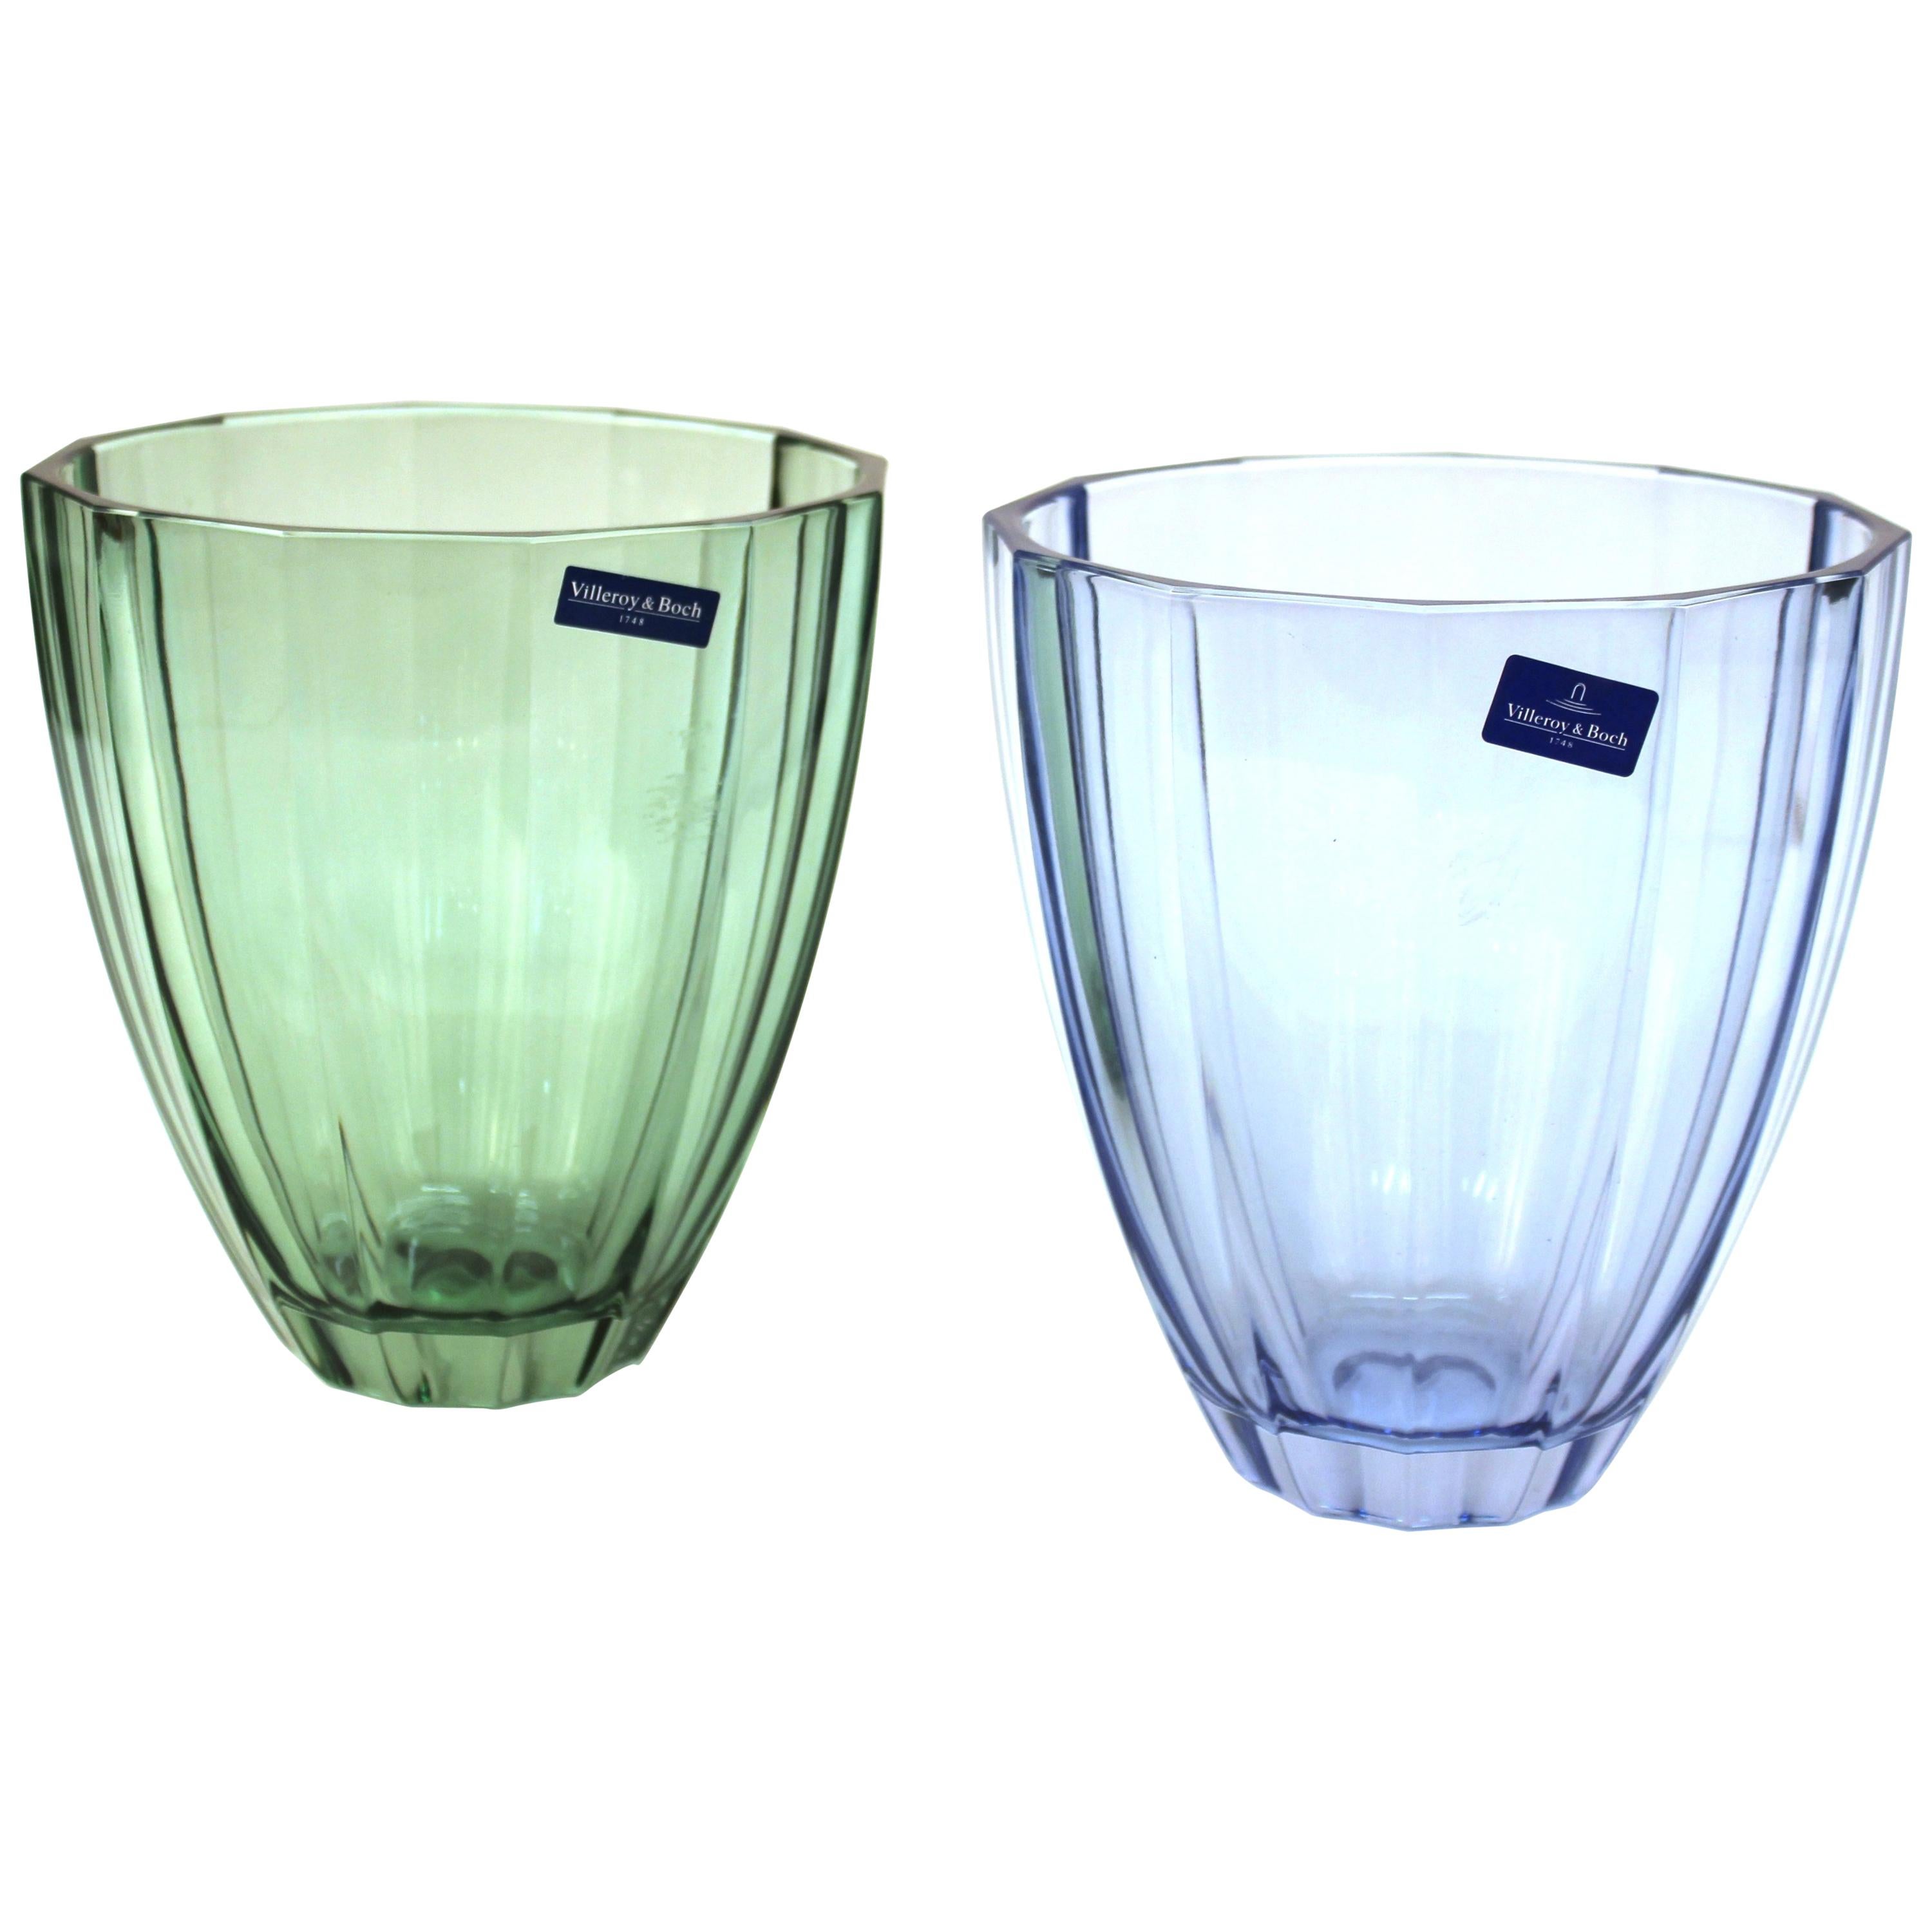 Vases en verre de style moderne Villeroy & Boch en bleu et vert